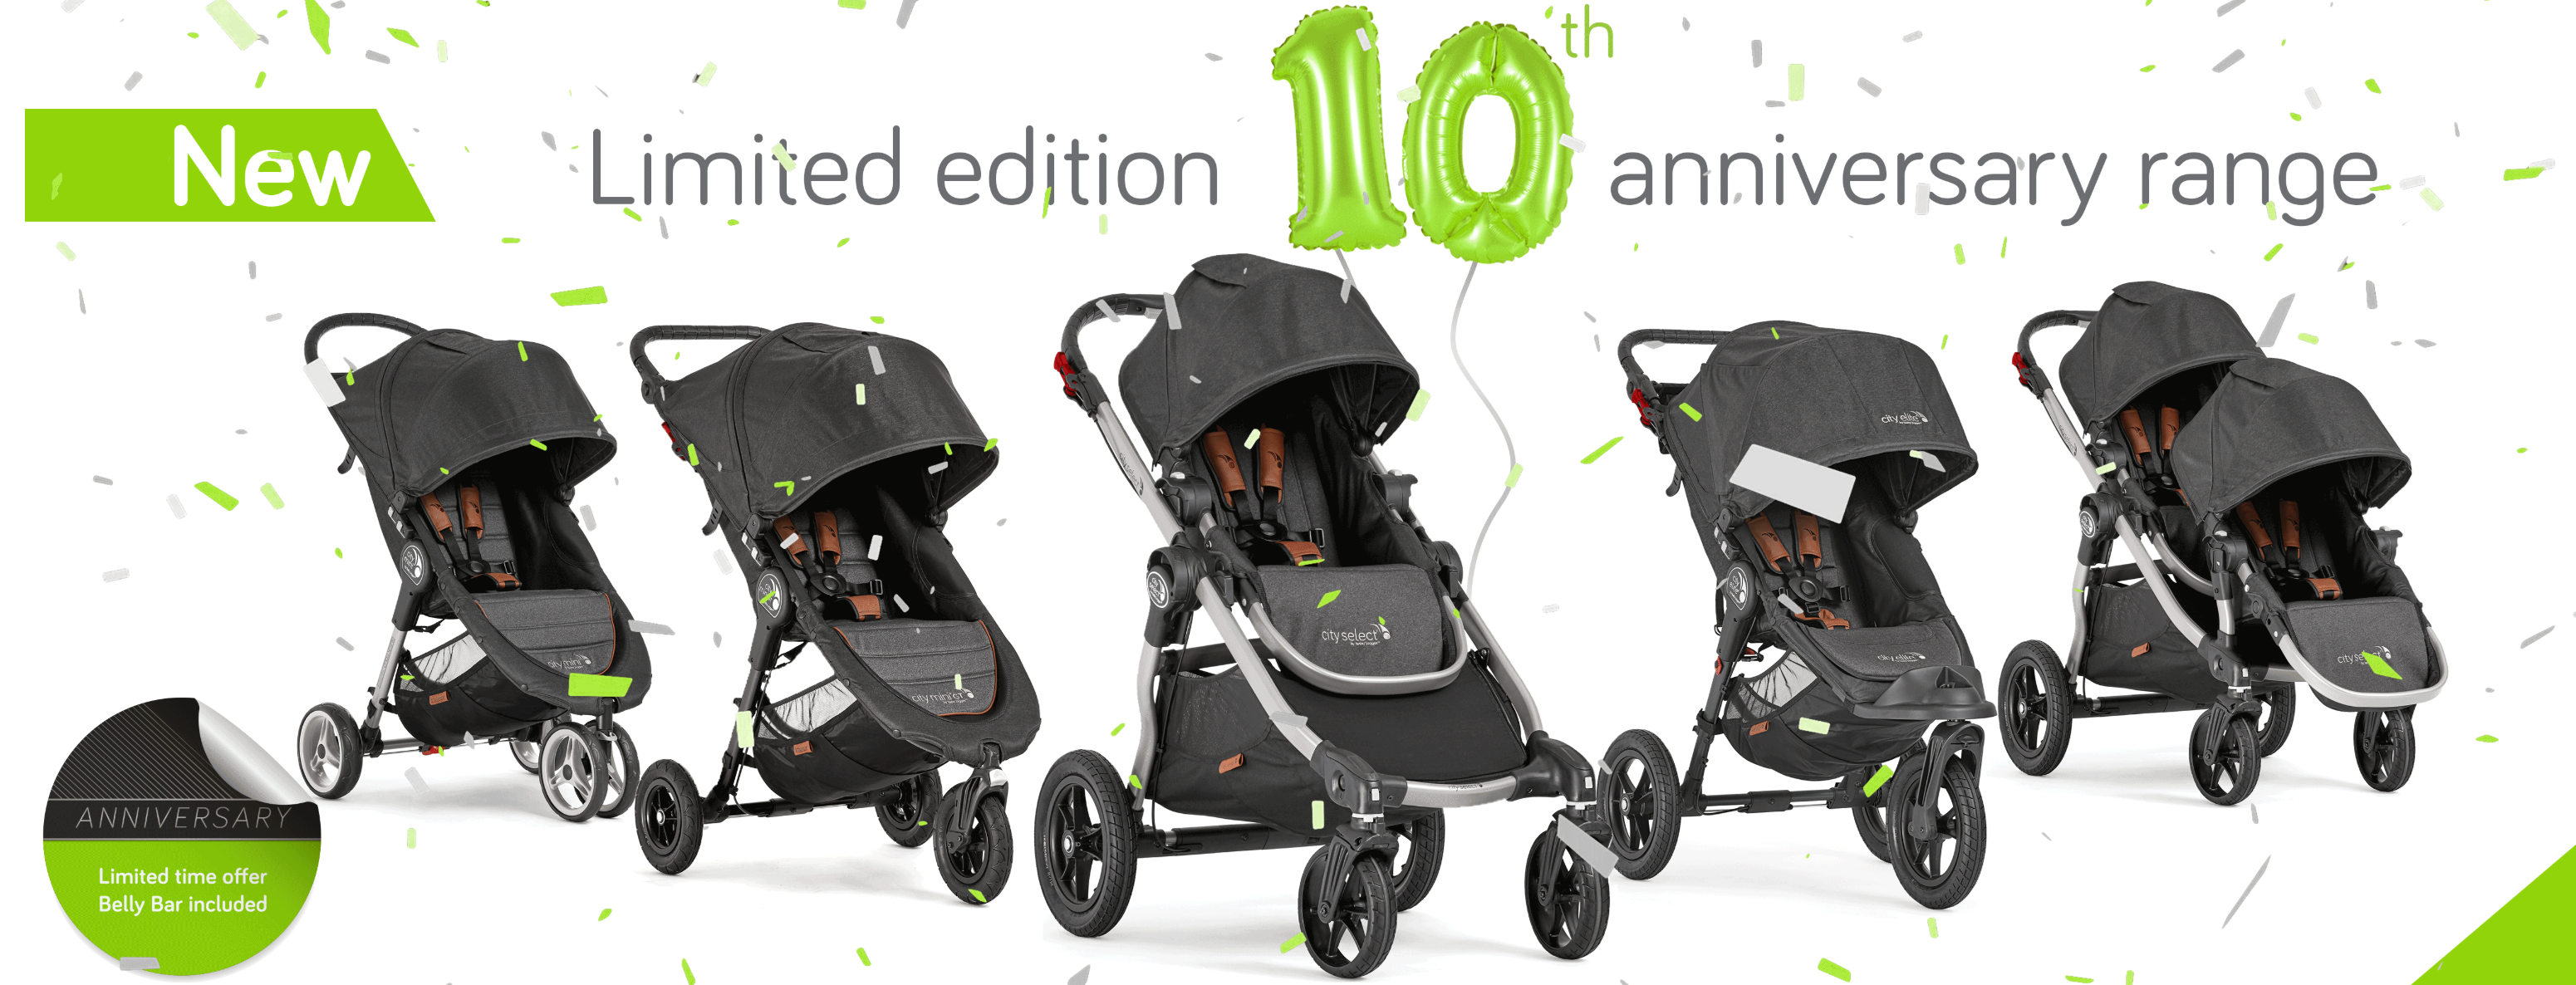 baby jogger elite anniversary edition